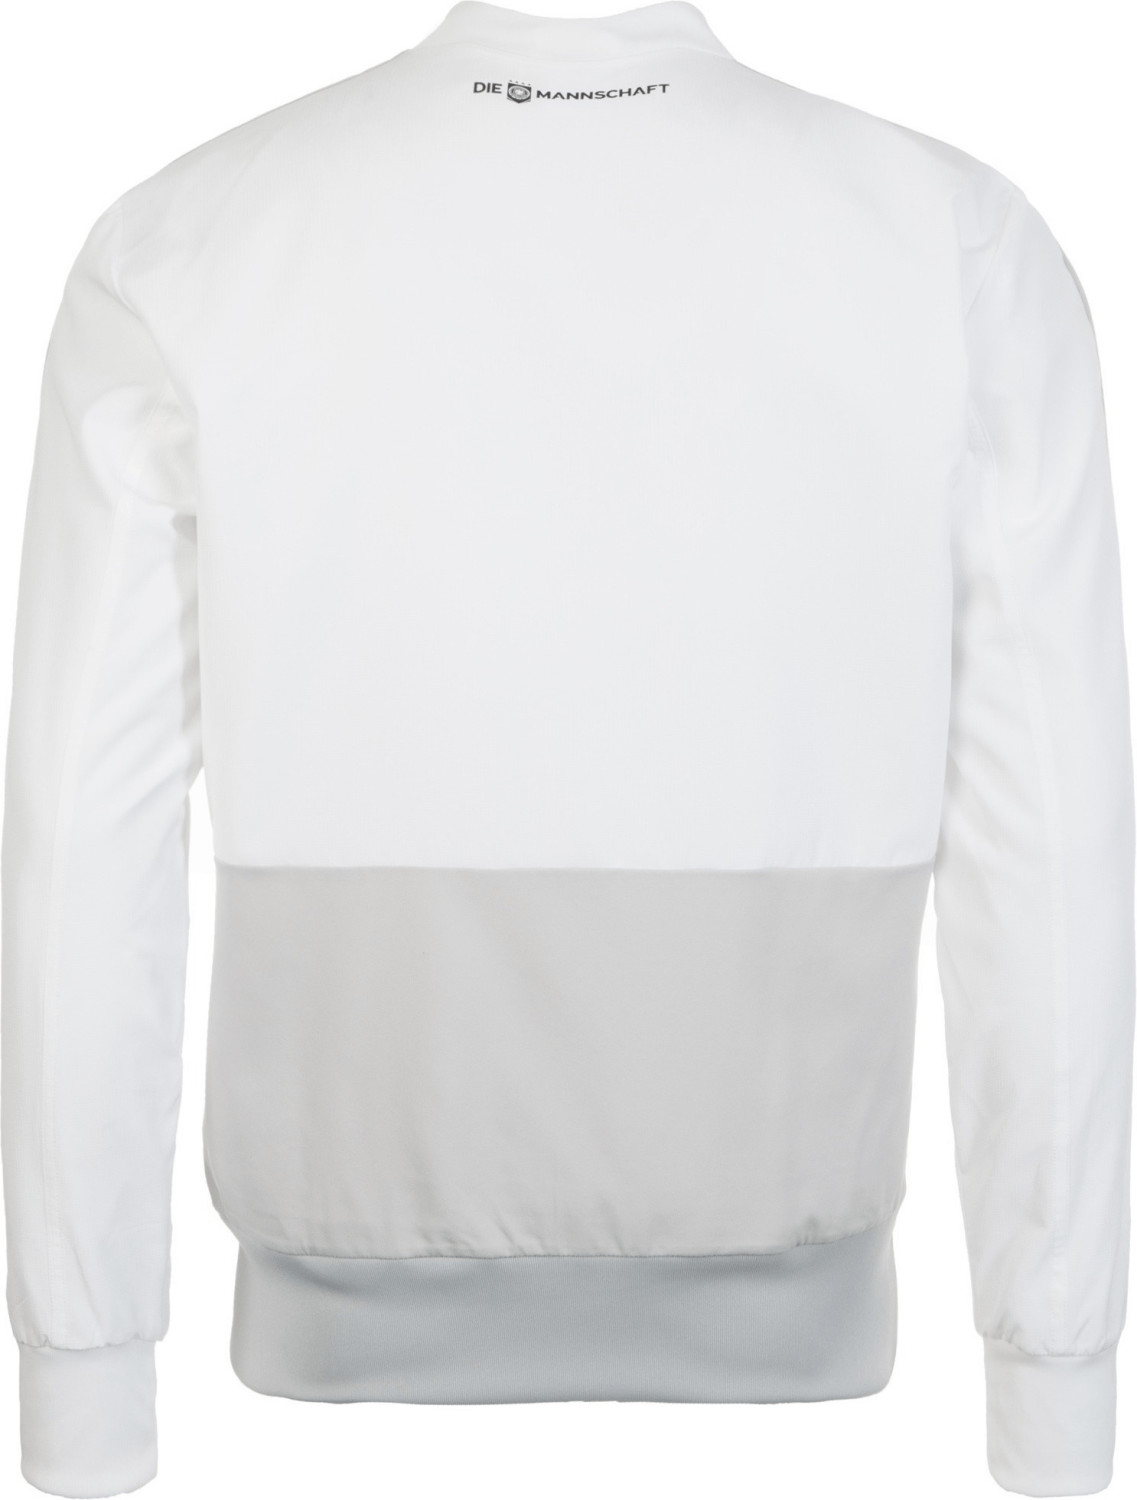 Adidas DFB Presentation Jacket WM 2018 white/grey two